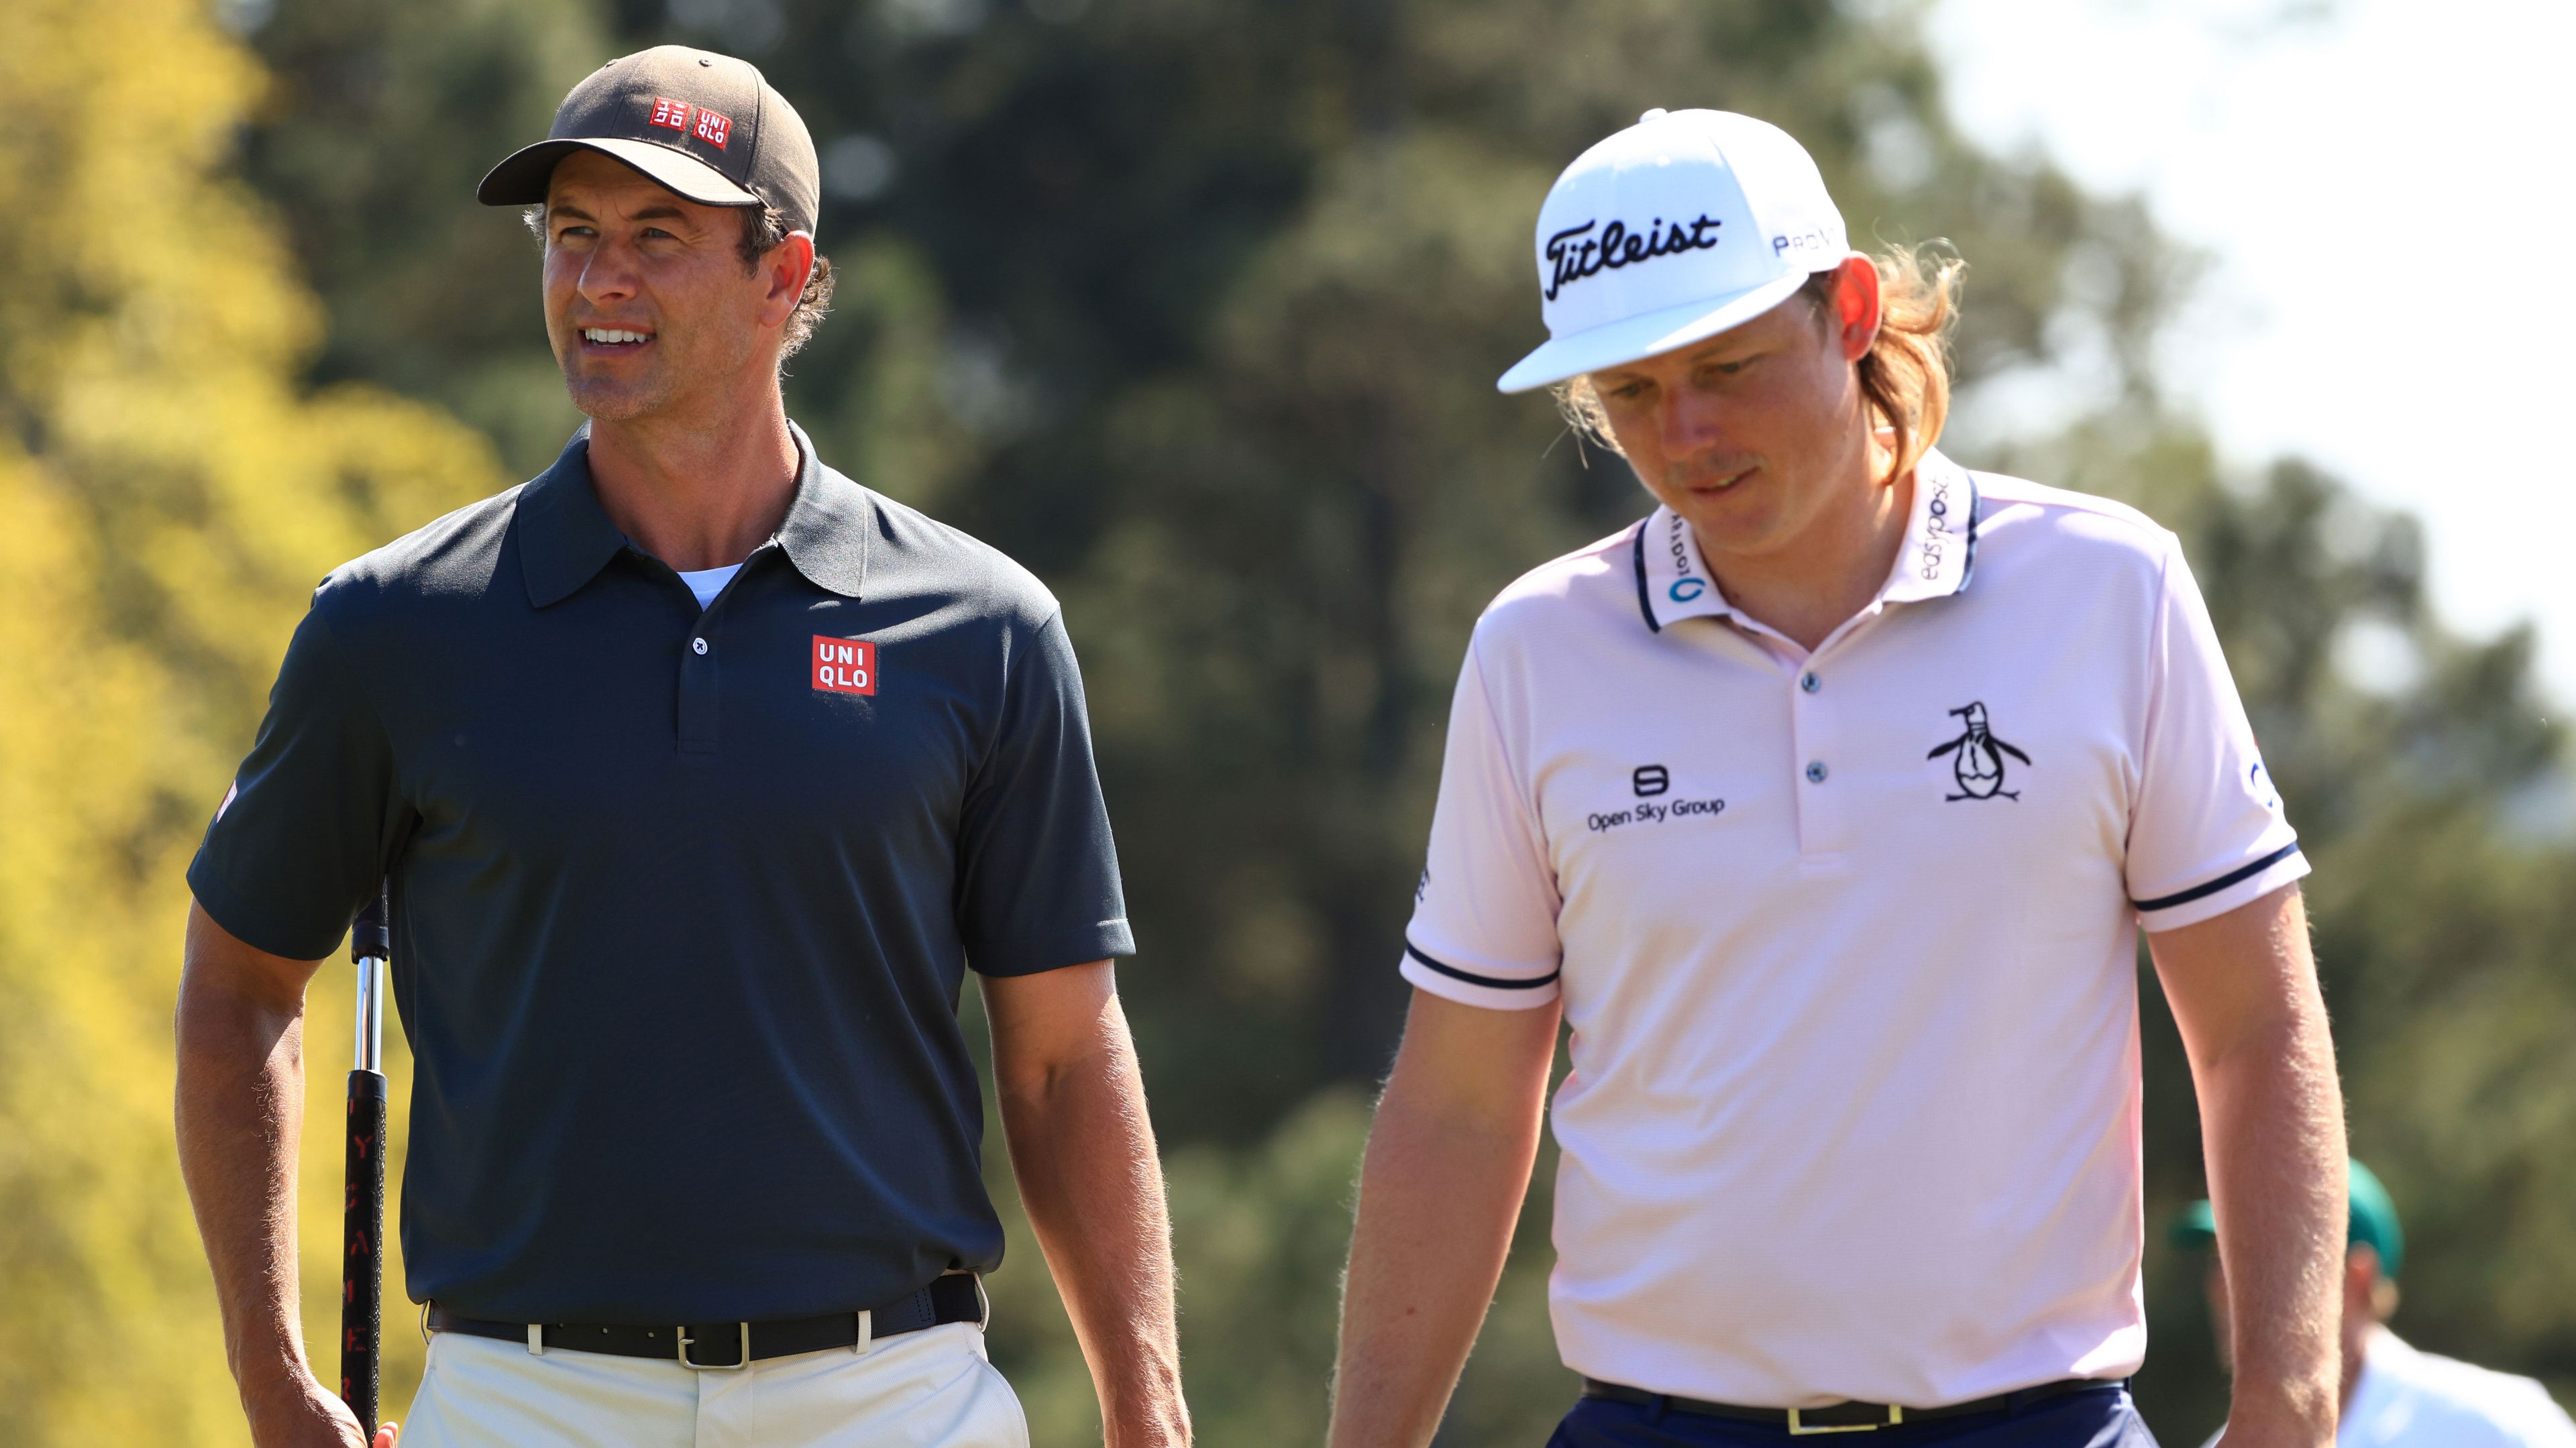 Australian golf stars Adam Scott and Cameron Smith prepare for The Masters.